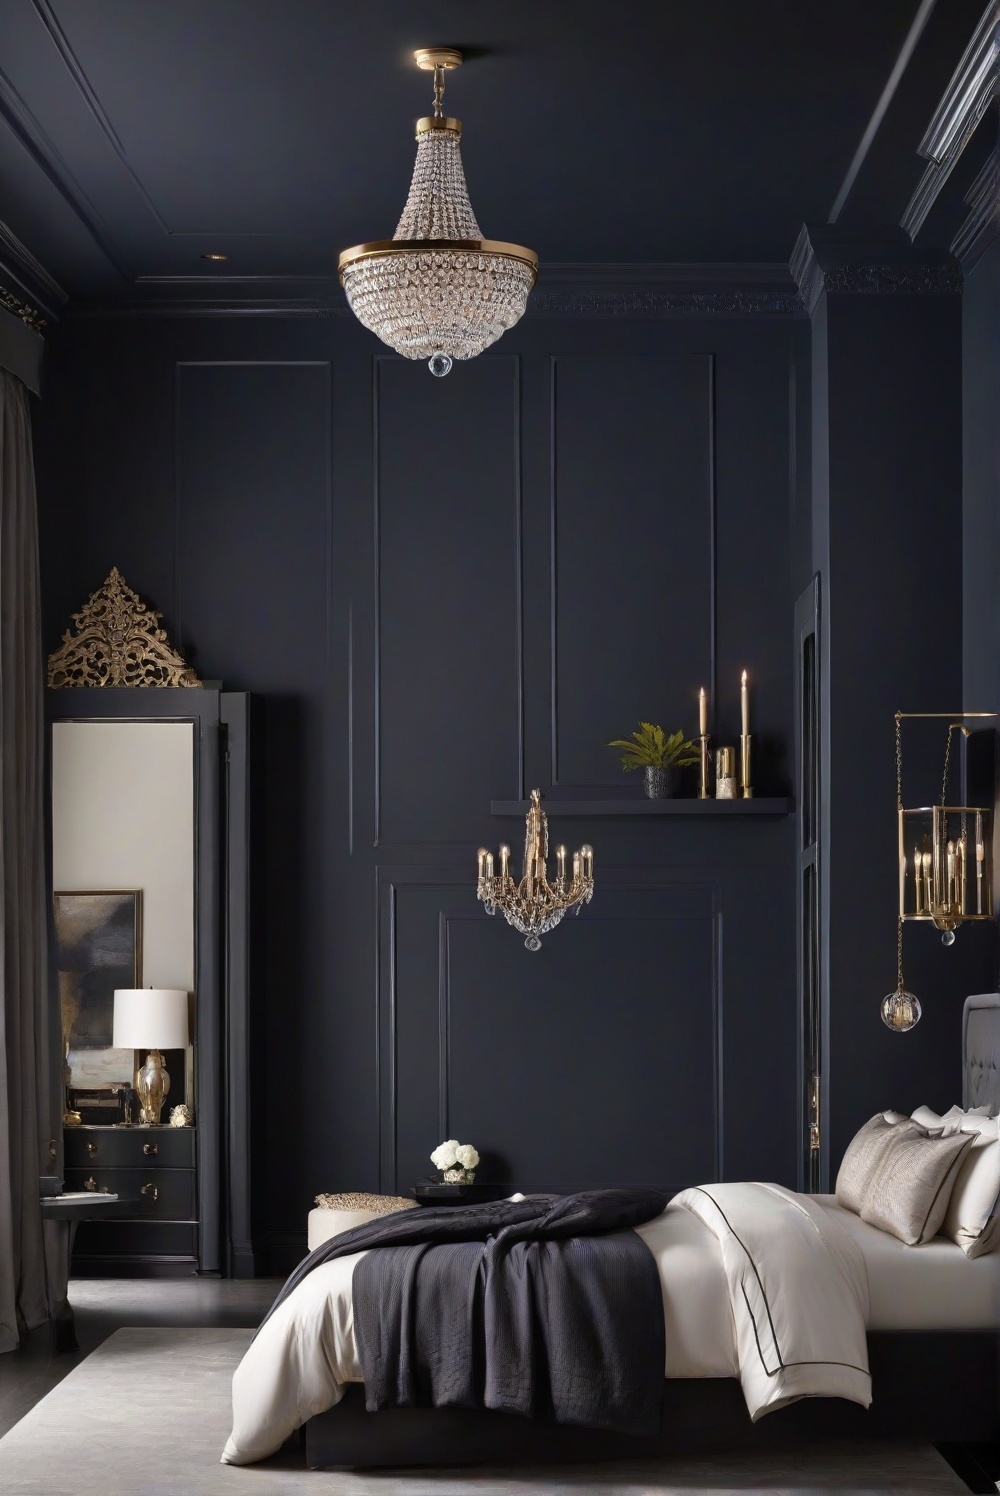 Caviar wall paint, moody bedroom decor, elegant bedroom design, interior design inspiration, luxurious bedroom decor, dark paint colors, bedroom decor ideas